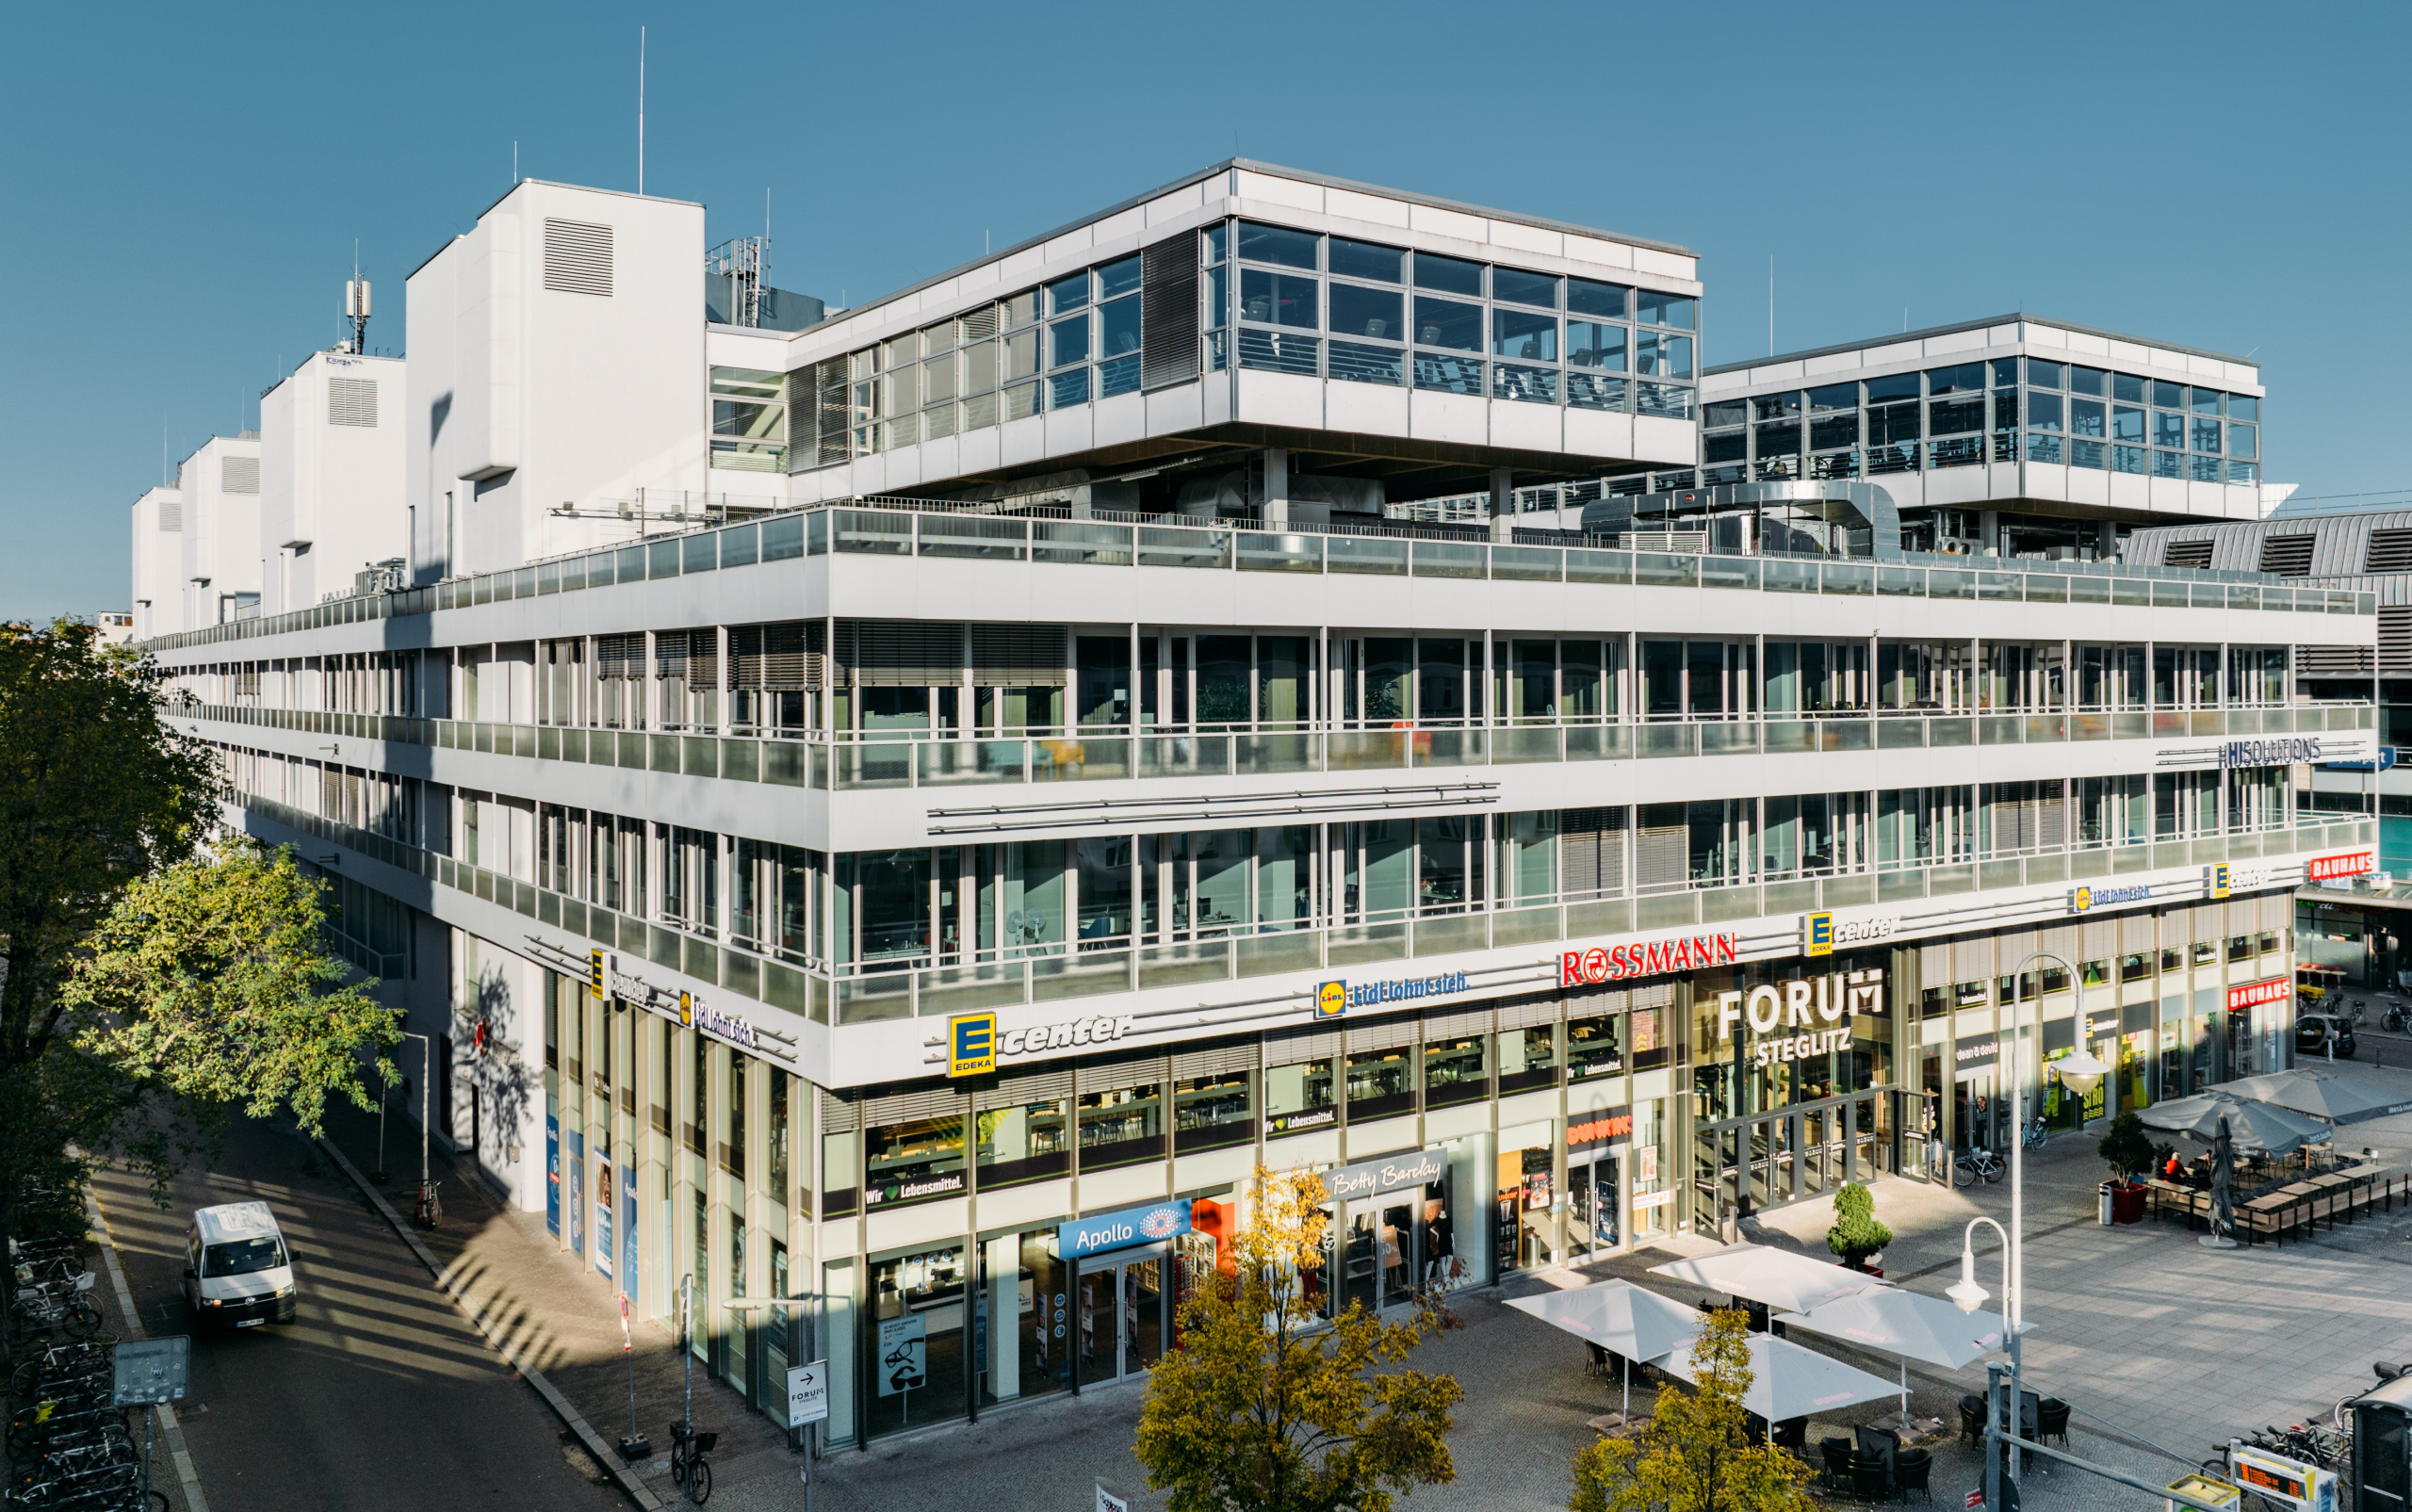 Jagdfeld Real Estate manages “Forum Steglitz” shopping centre in Berlin